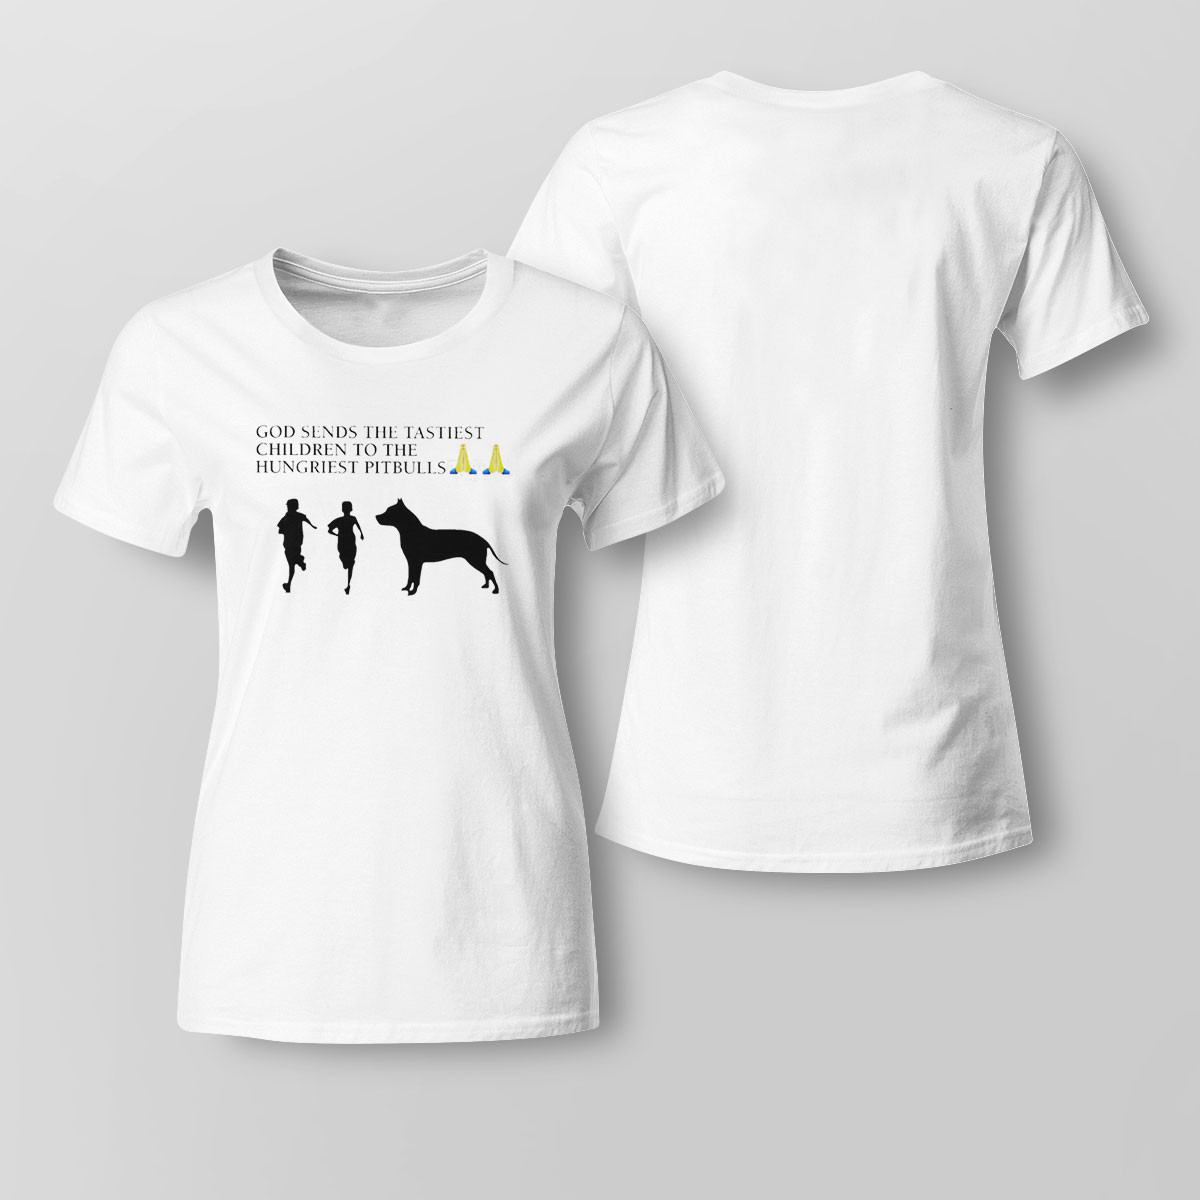 pitbulls and parolees t shirts | Premium T-Shirt